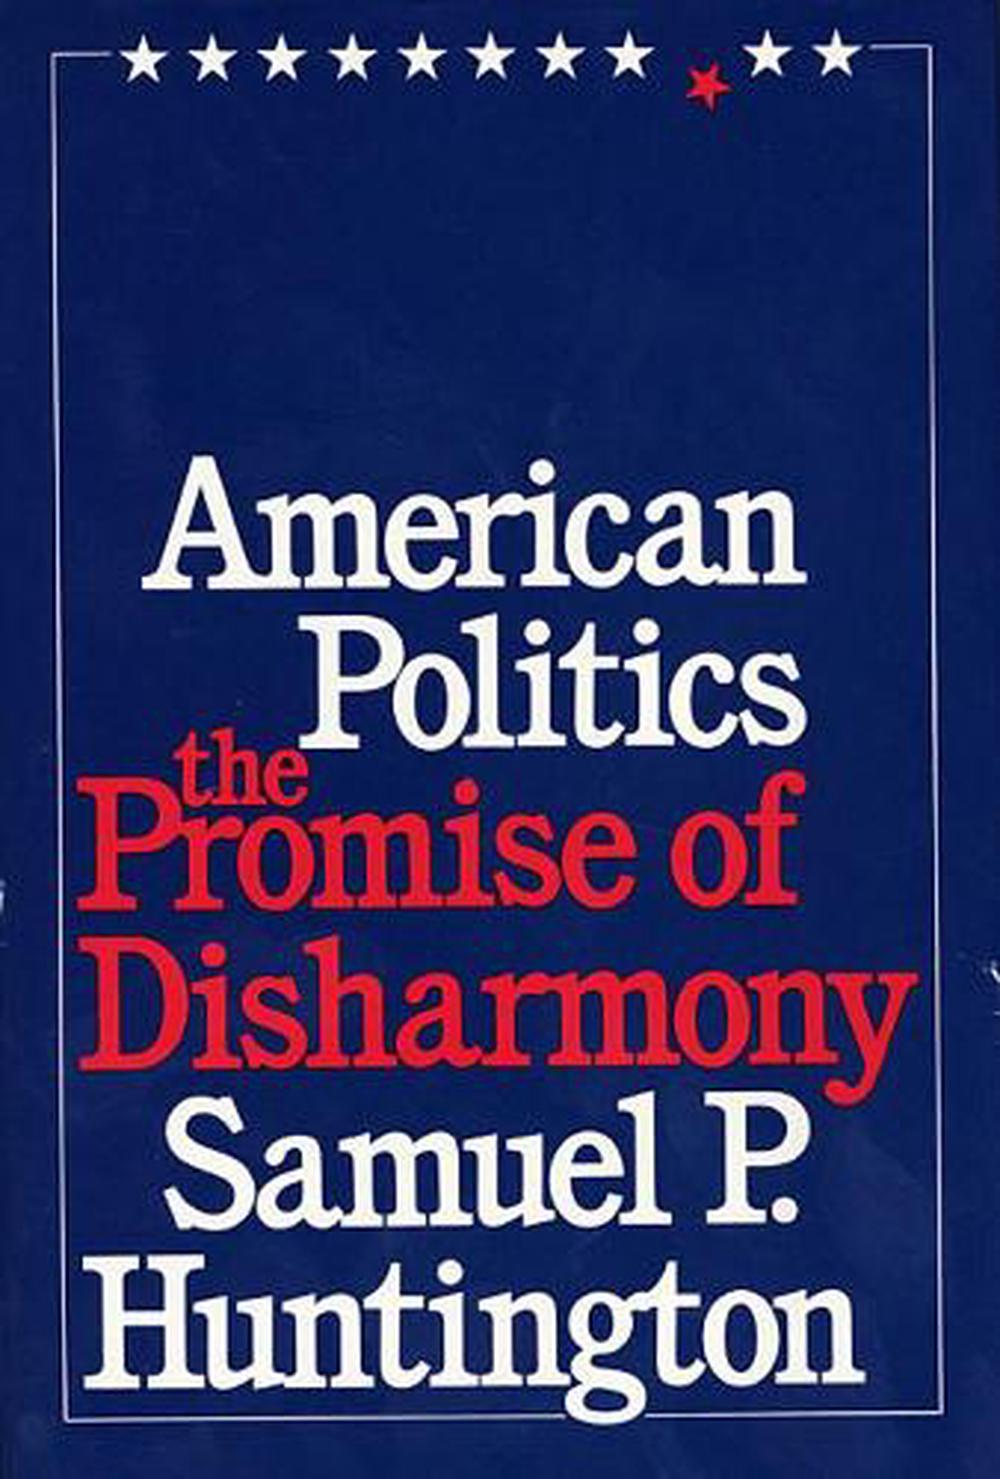 American Politics The Promise of Disharmony by Samuel P. Huntington